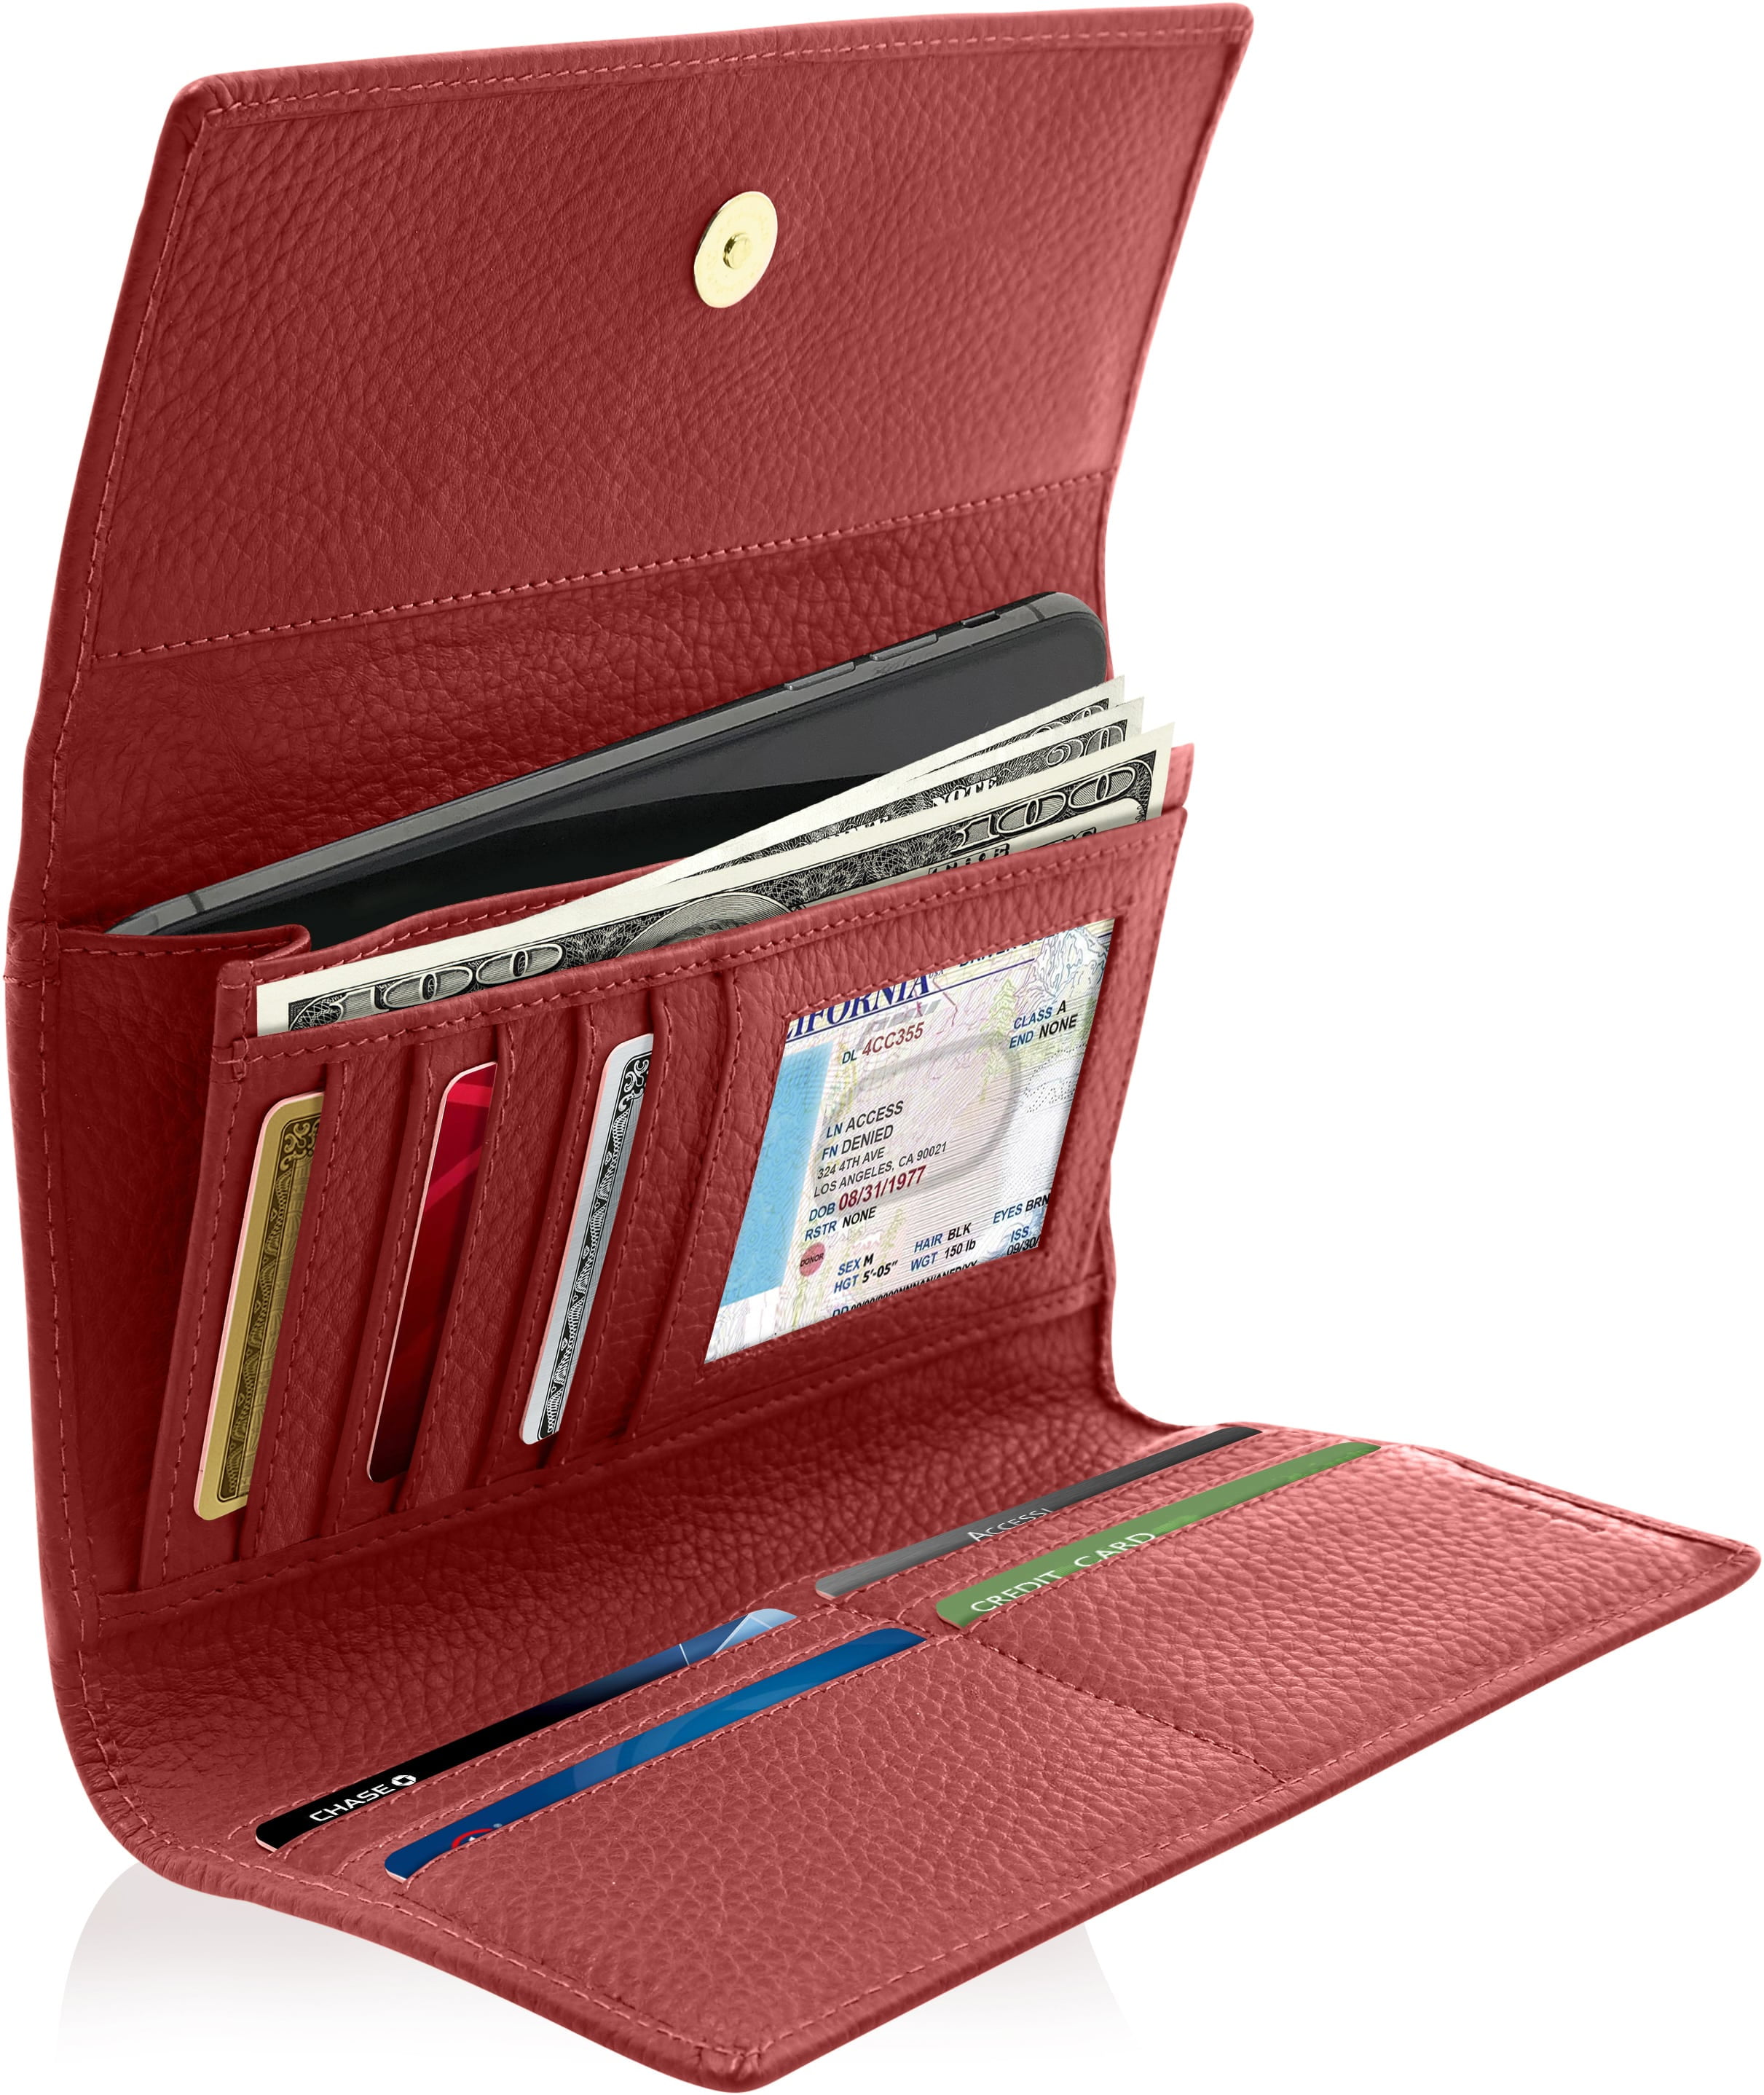 WindTook Wallet for Women RFID Credit Card Holder Zip Around Clutch Travel Wallet 3 in 1 Ladies Wallet